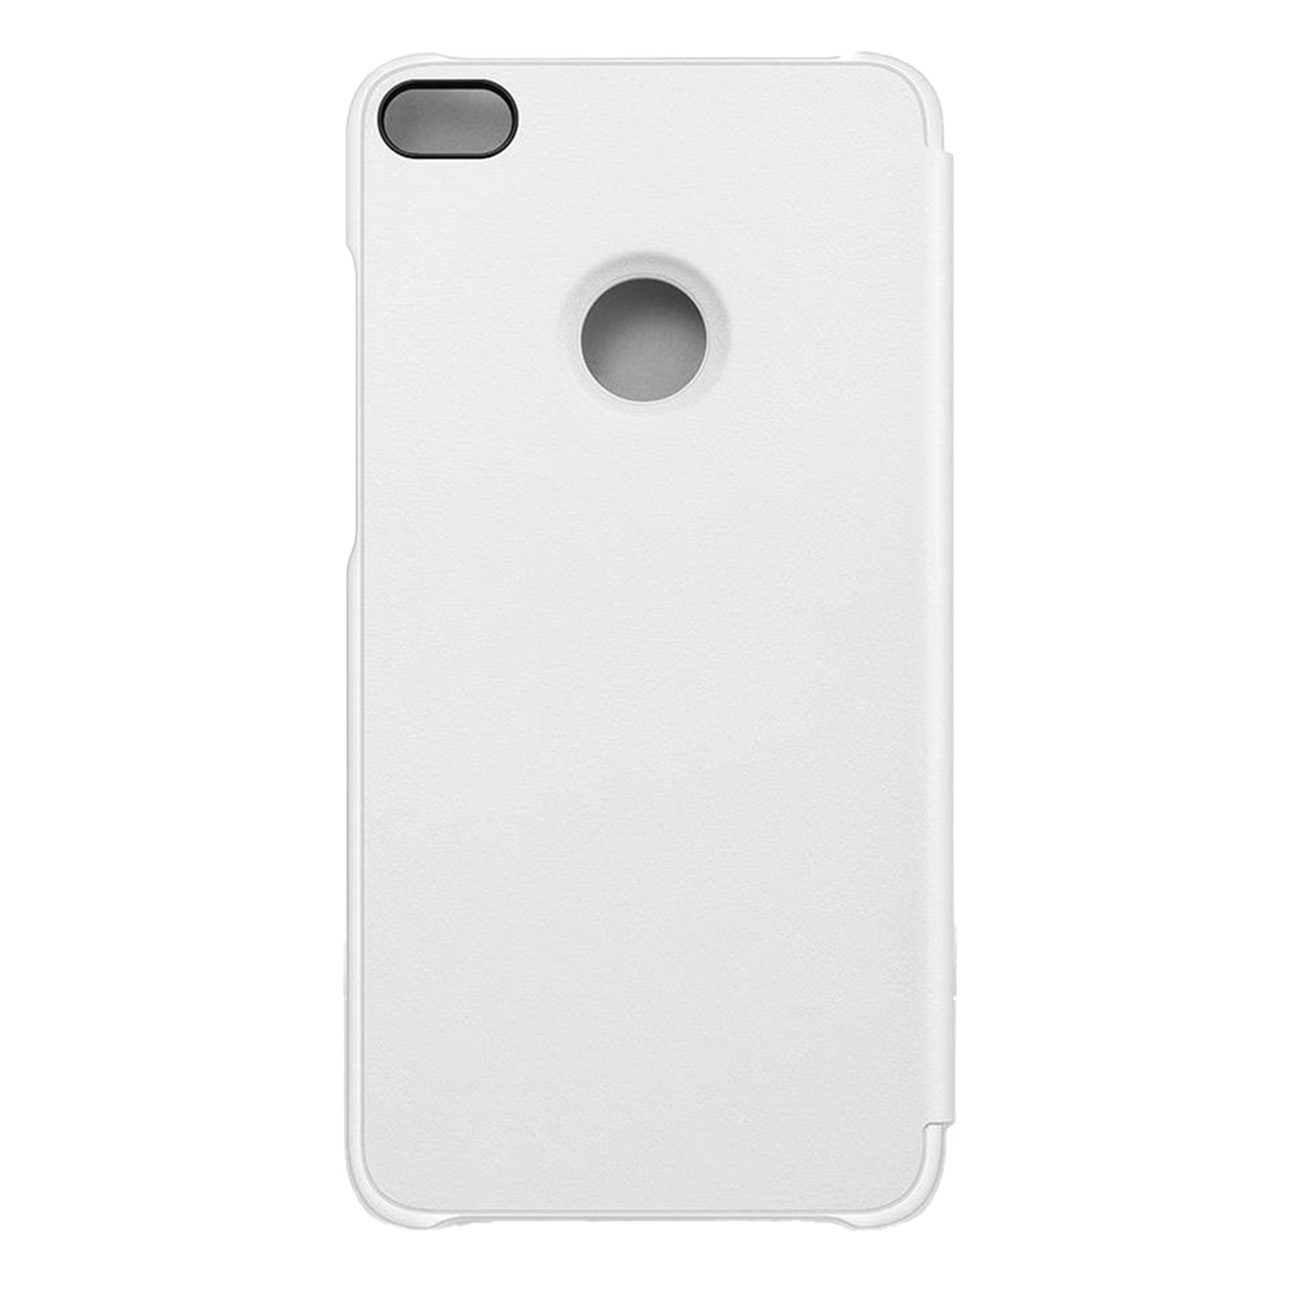 HUAWEI P8 Lite Flip weiß Smartphone Huawei, Lite, P8 Cover, Case, Full